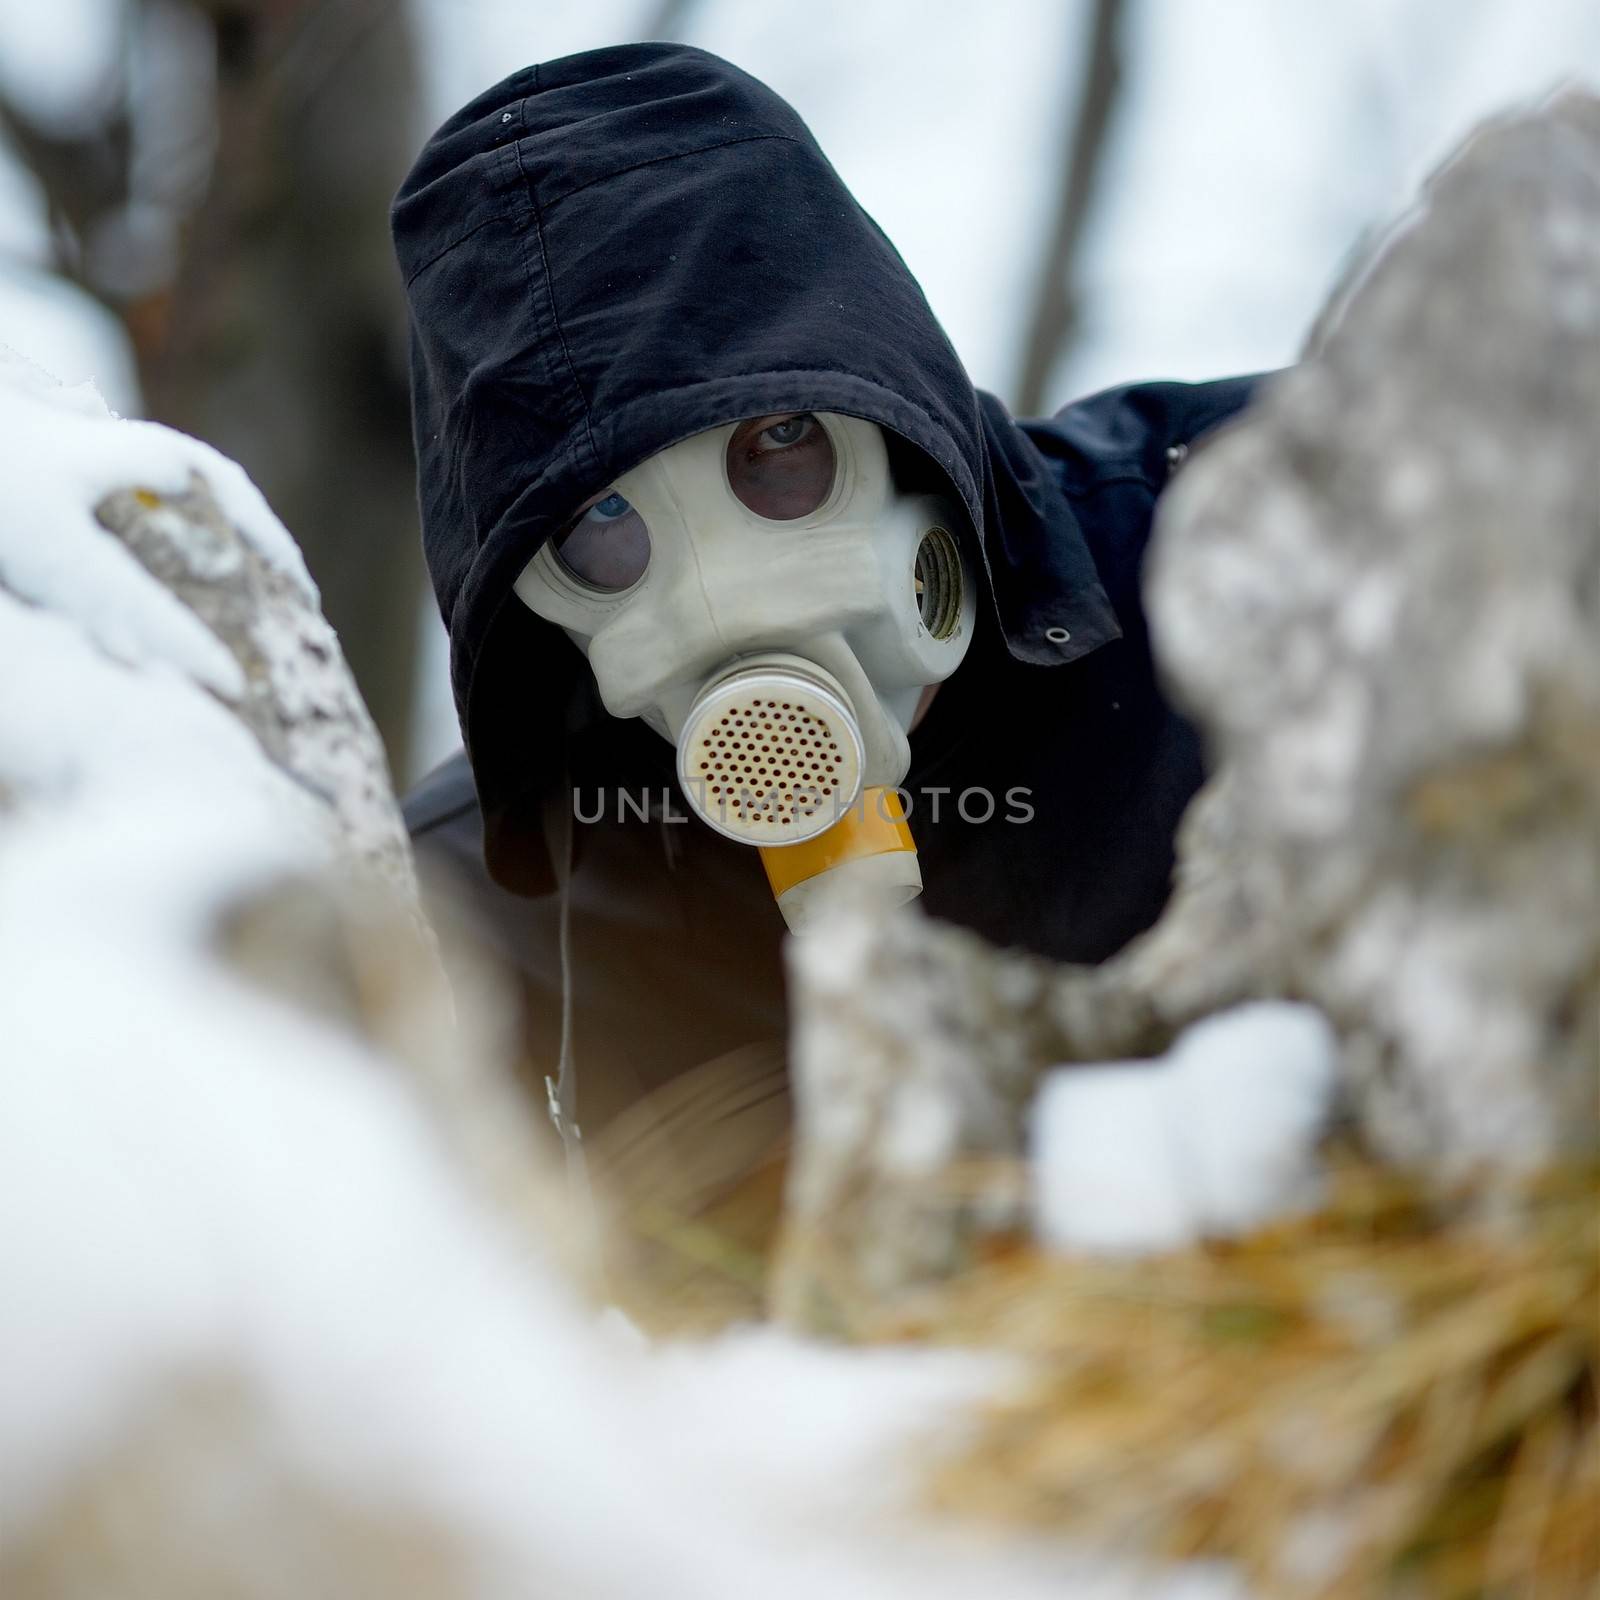 Man in gas mask hiding behind rocks